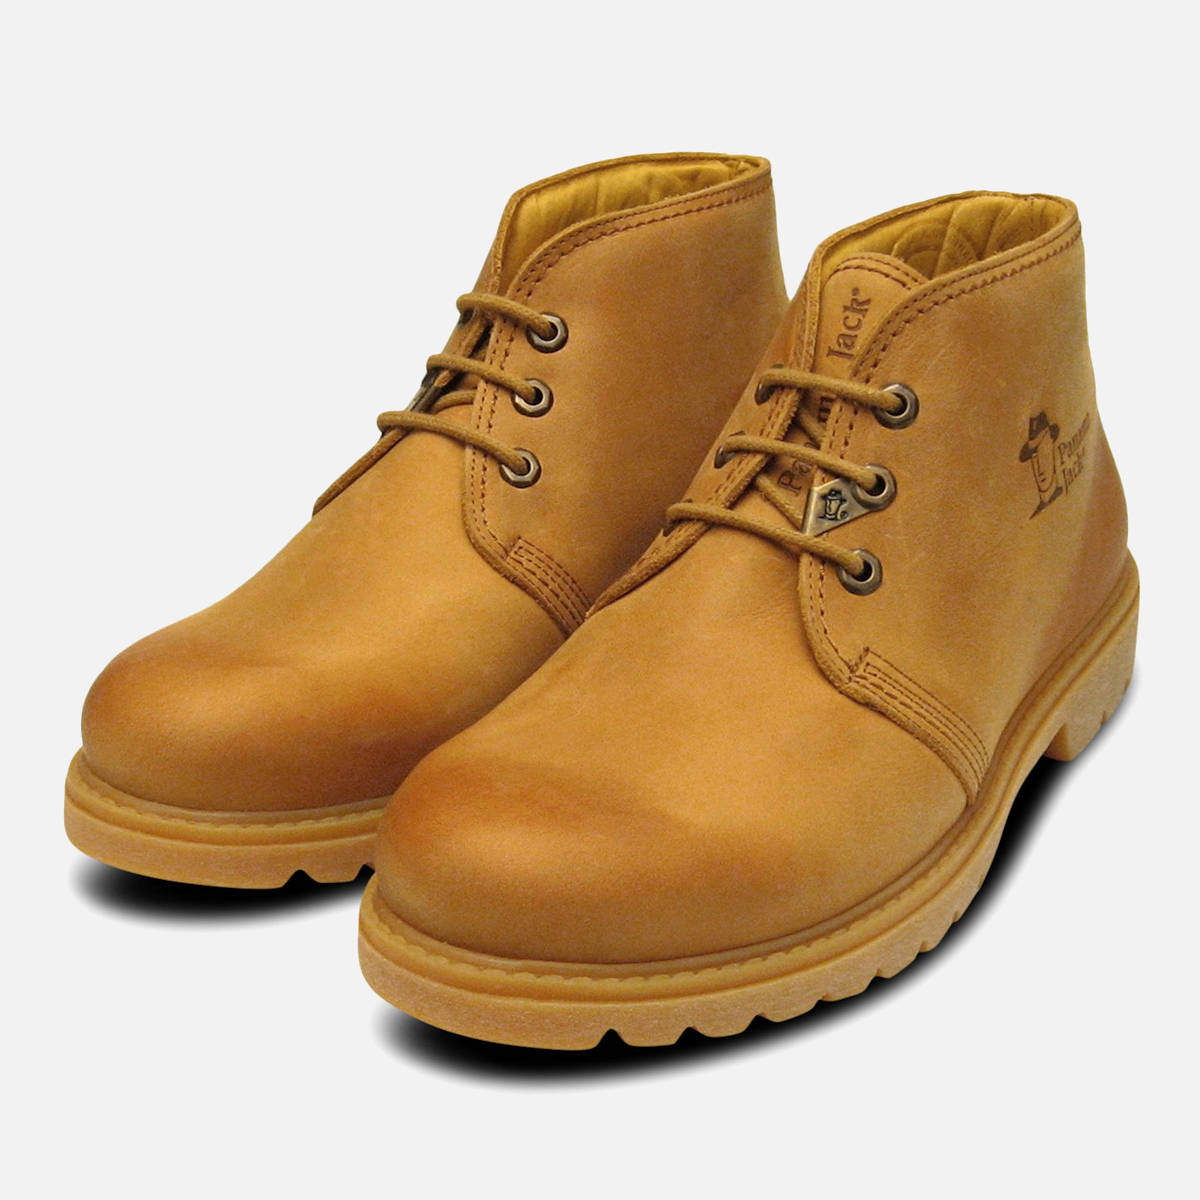 panama jacks boots